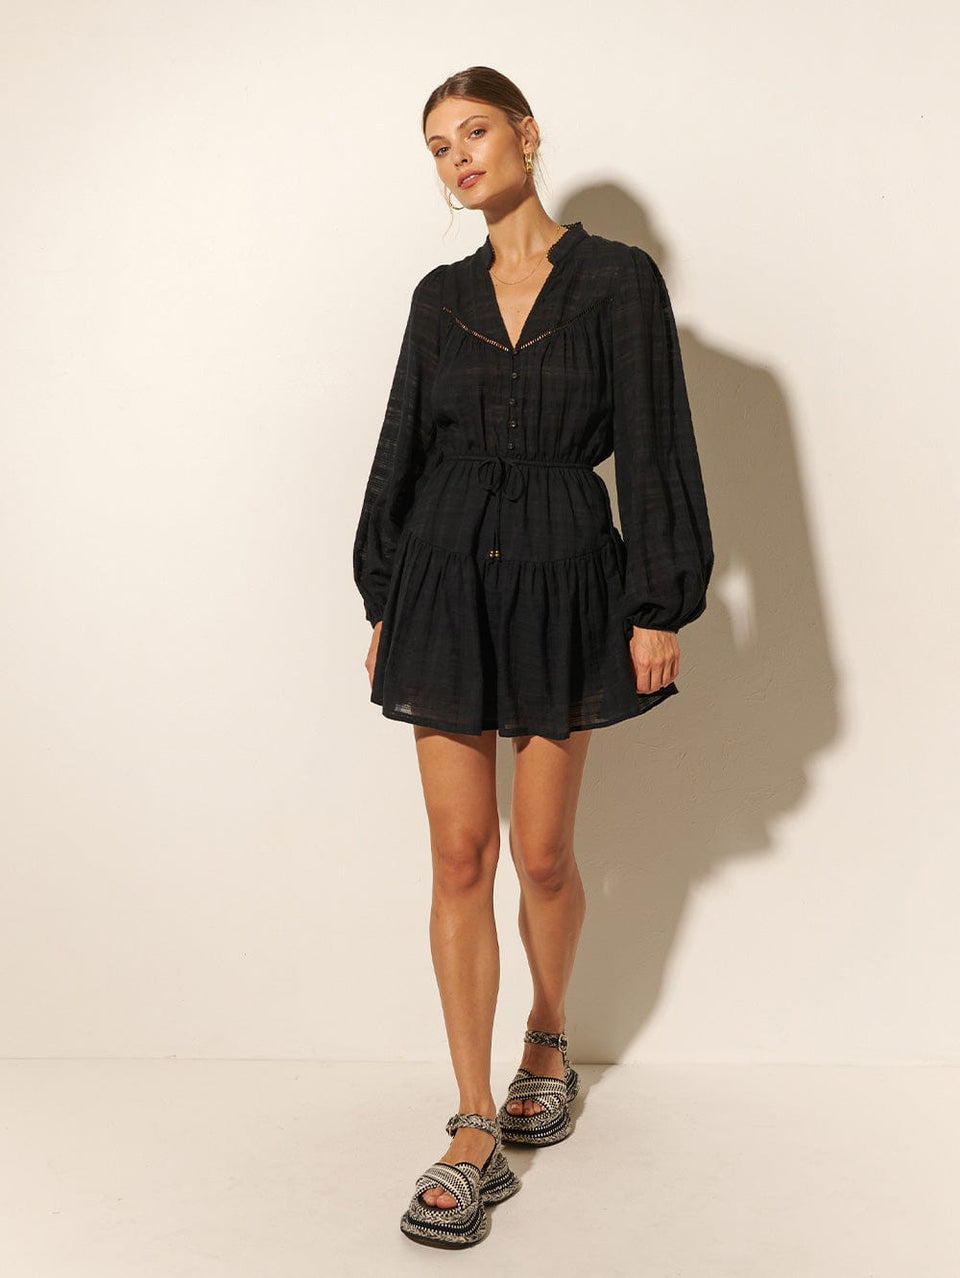 Studio model wears the KIVARI Rafaelle Mini Dress: a black dress made from cotton check featuring a button-front bodice, full-length blouson sleeves, drawstring waist and gathered hem frill.